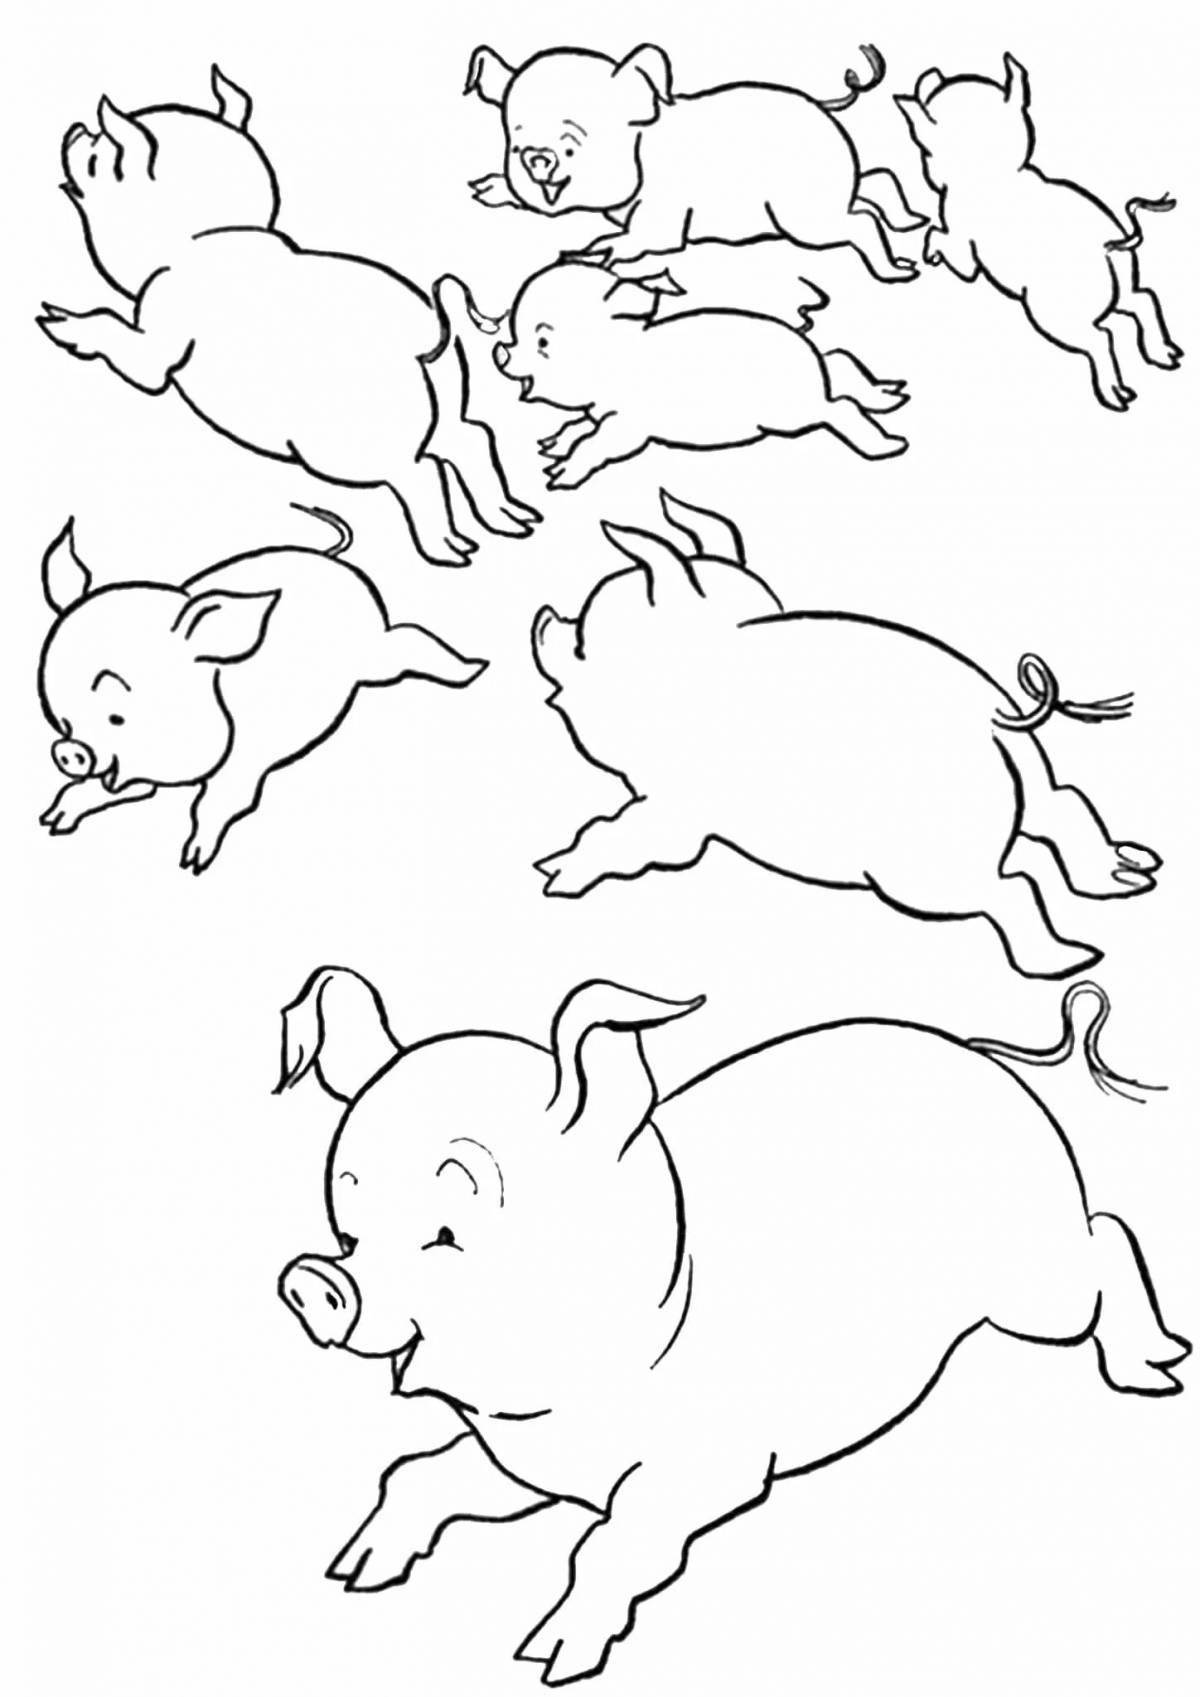 Cute mini pig coloring book